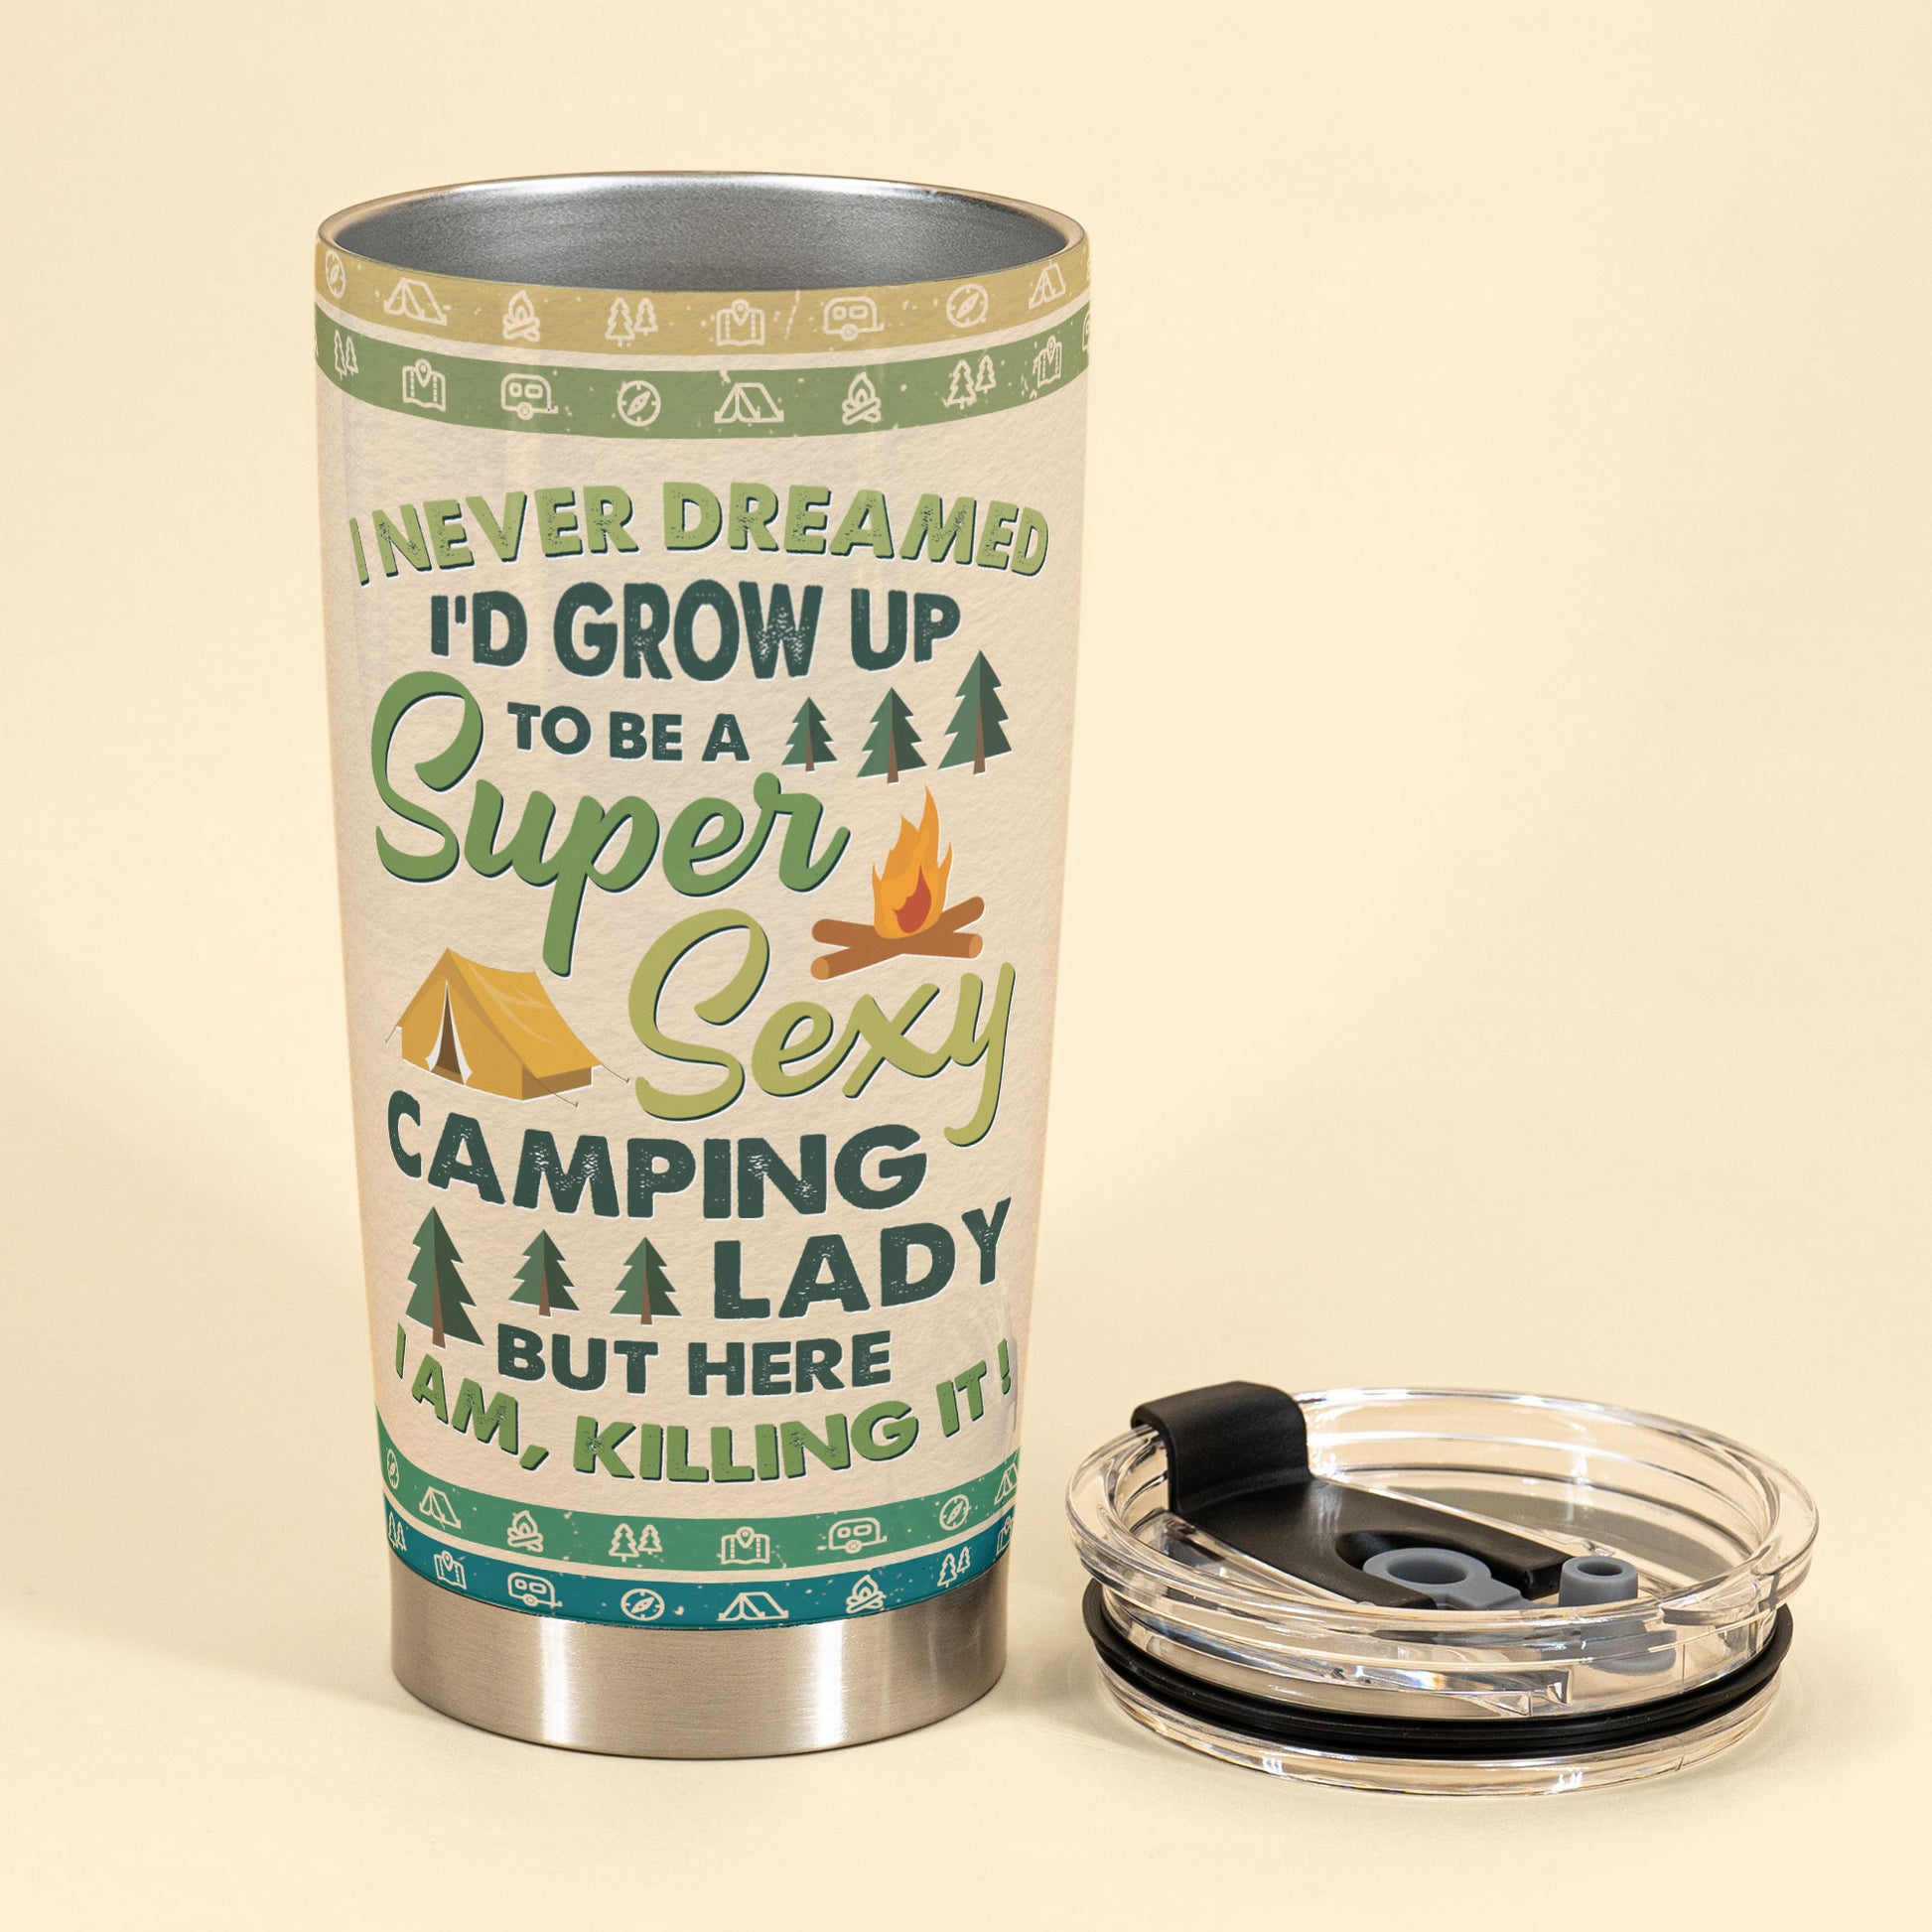 Happy Camper 20oz Tumbler Template, Camper Tumbler Design, Camping